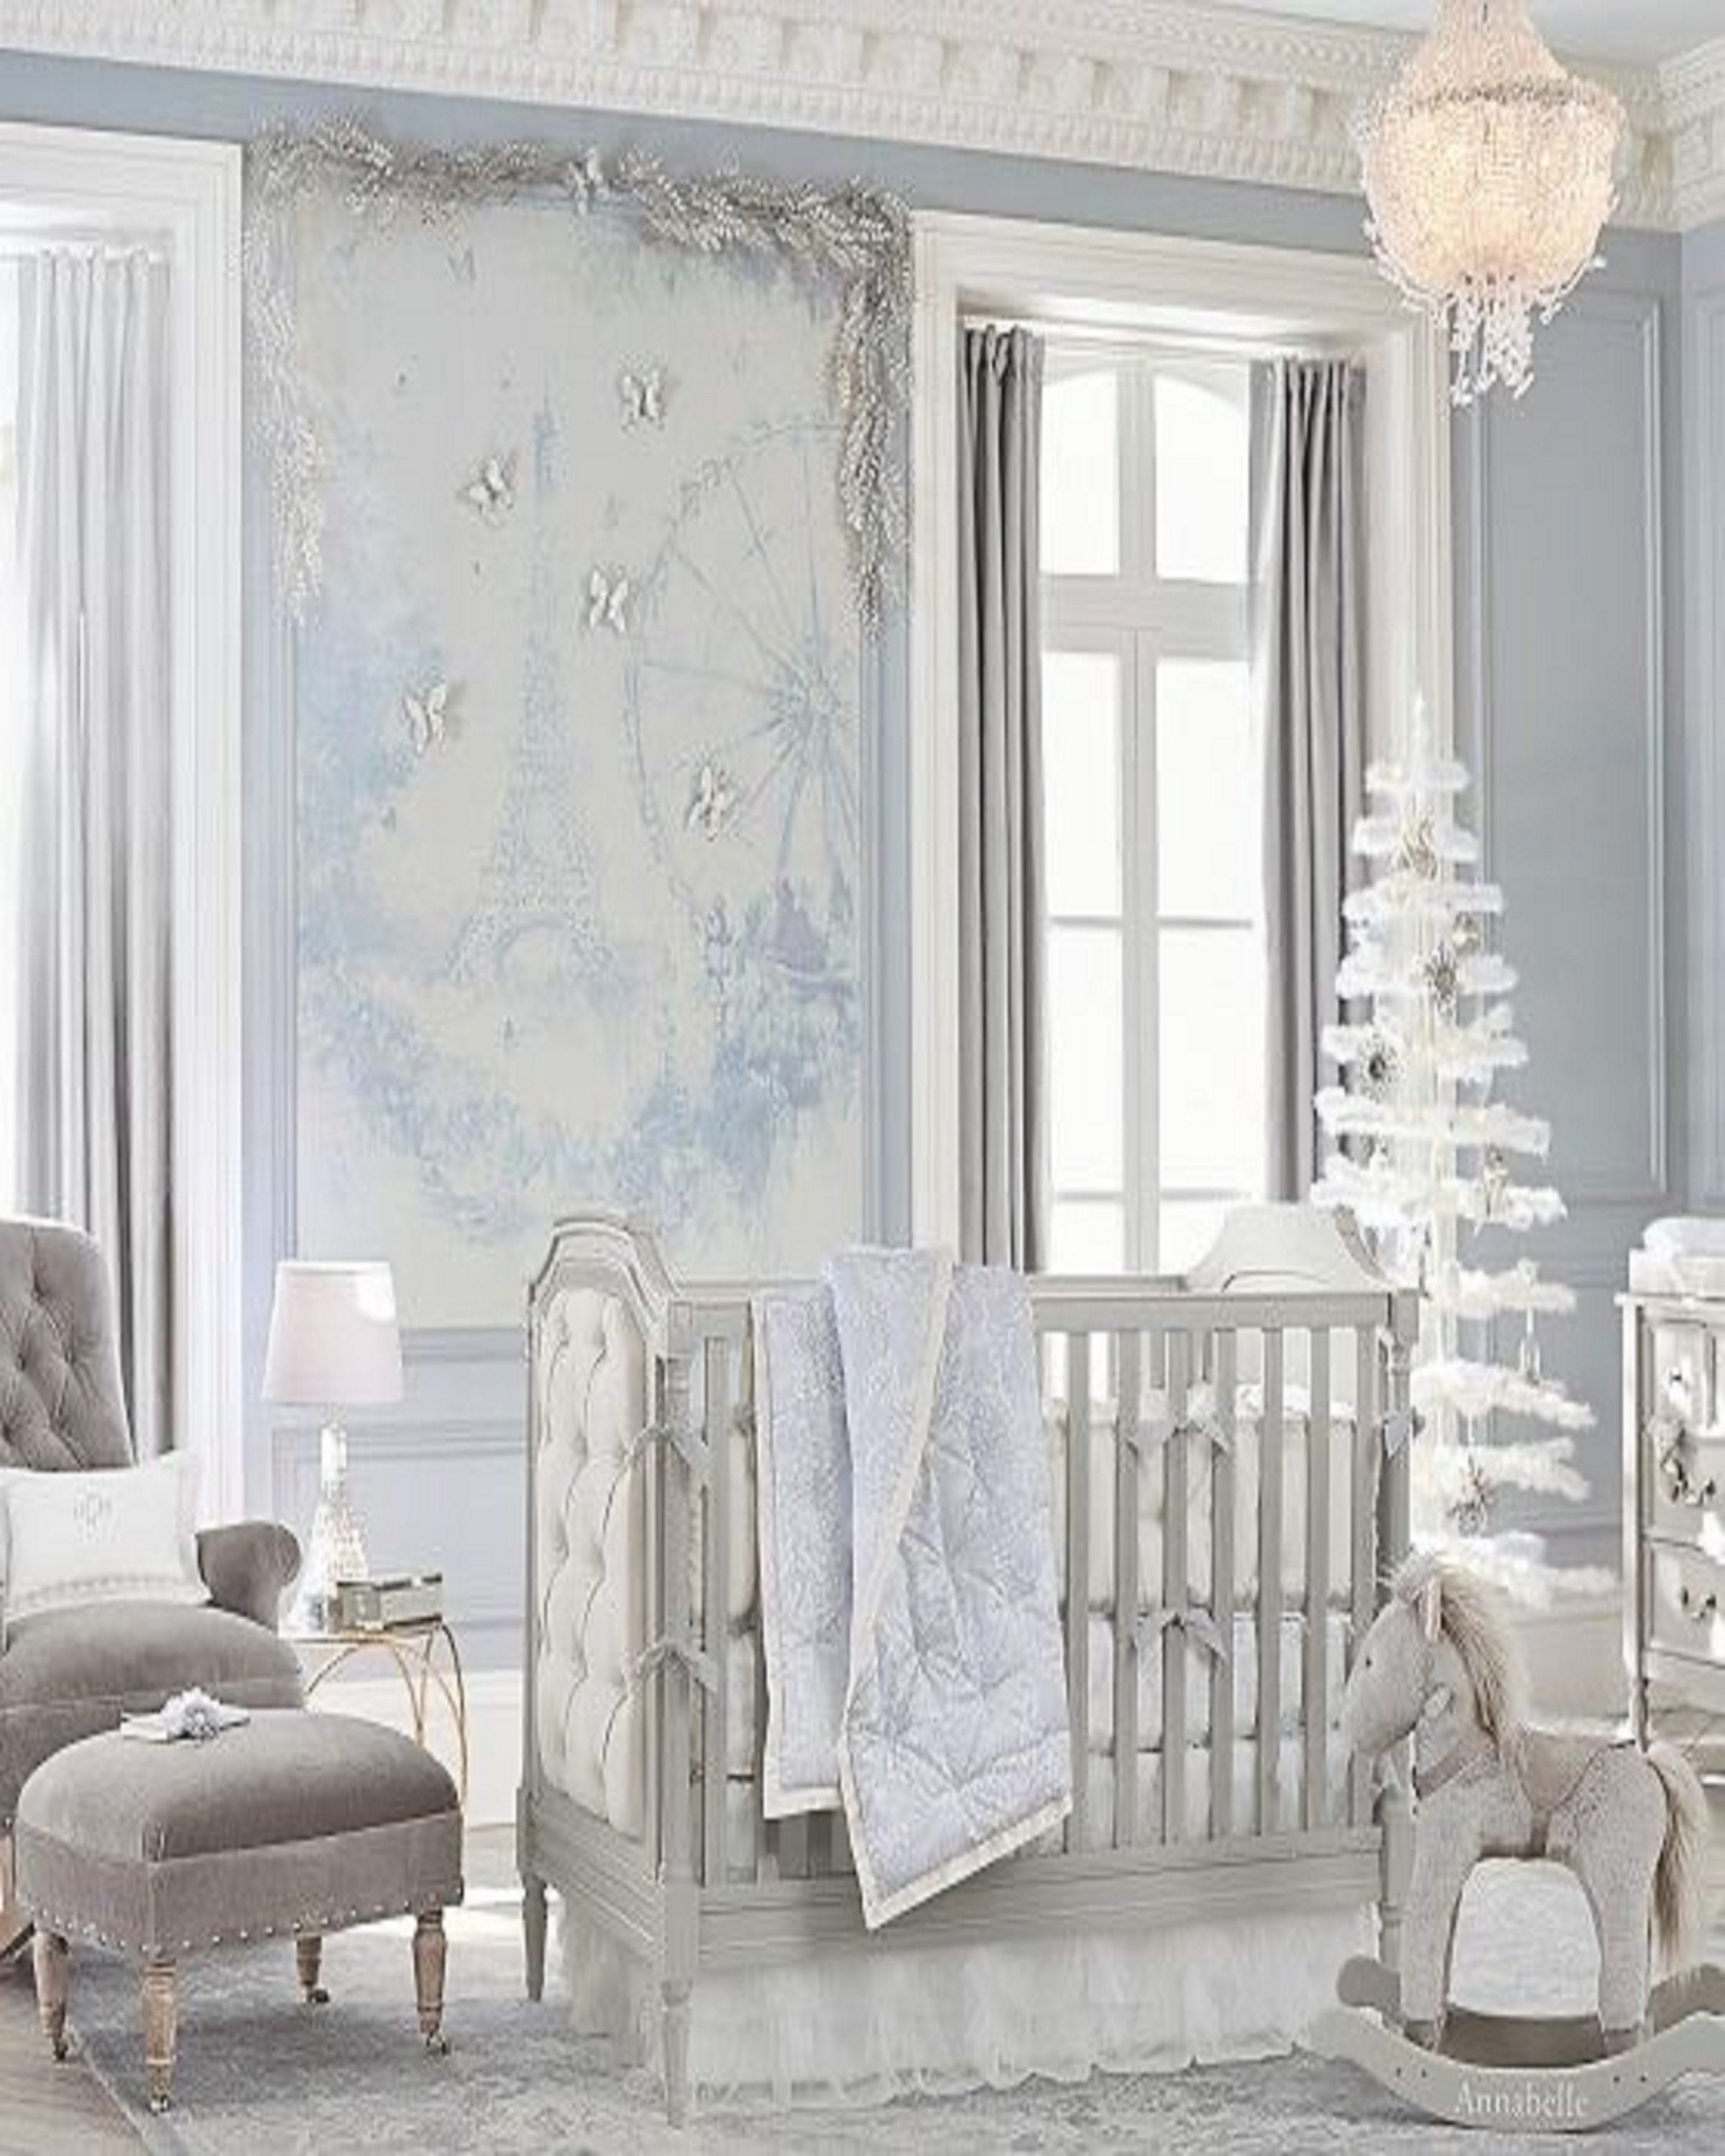 Luxury Crib - Baby Cribs & Cots